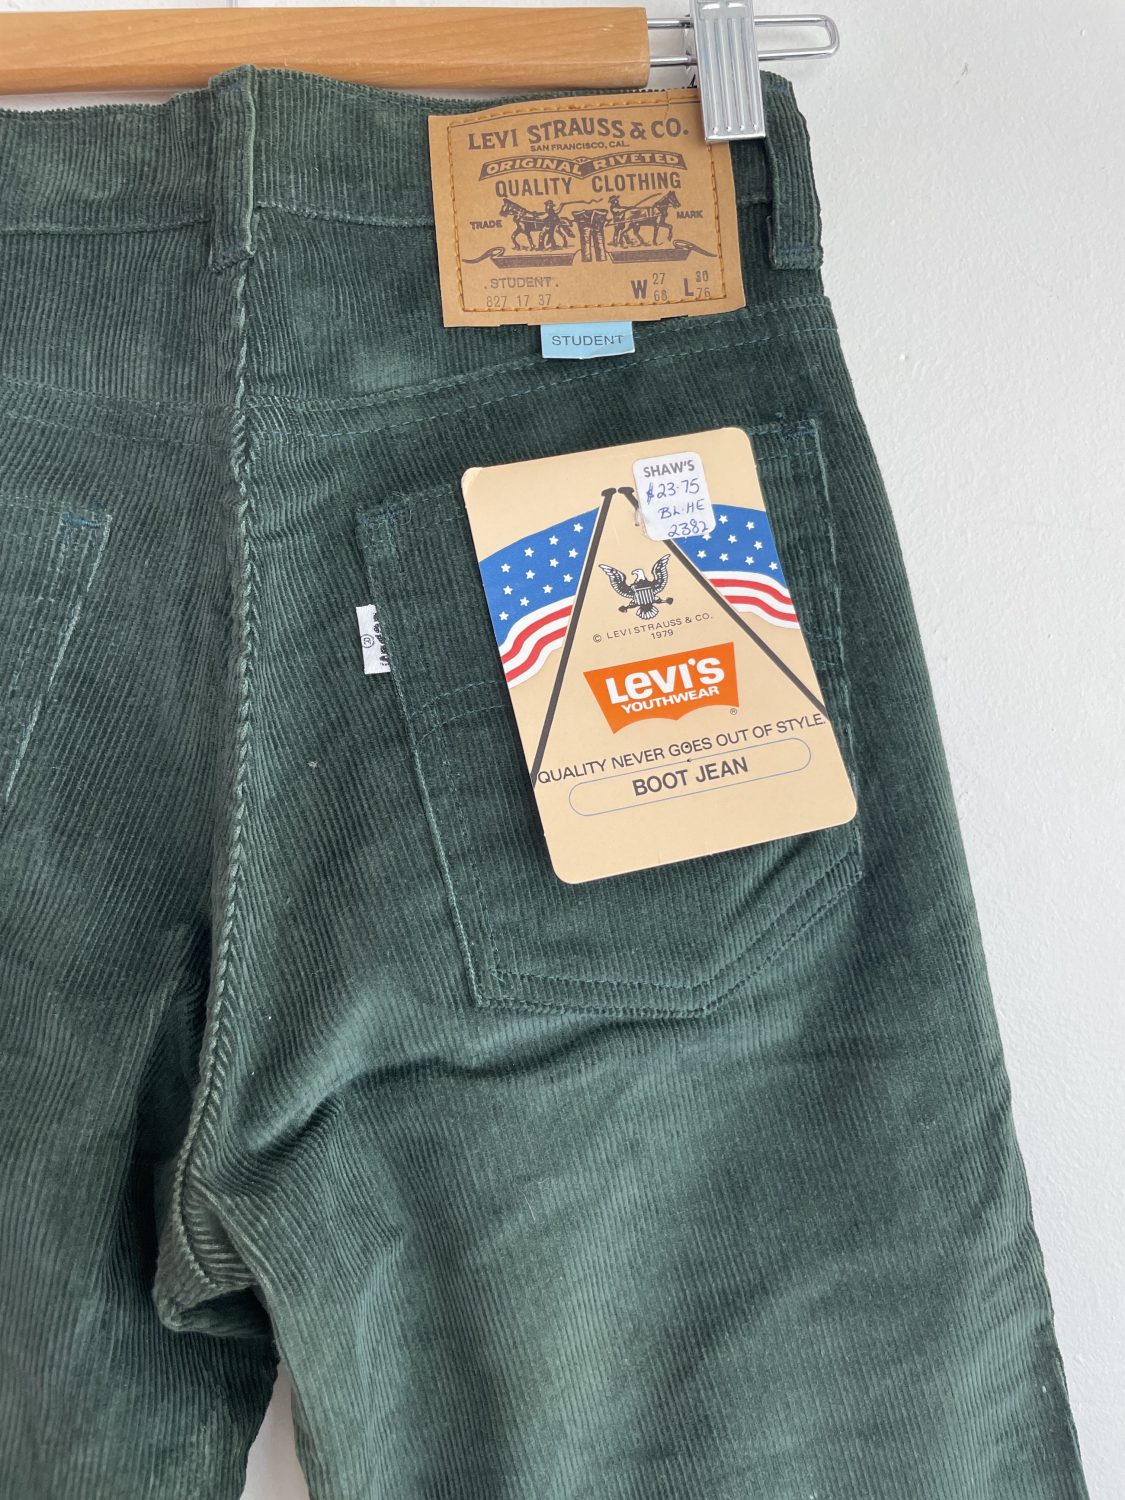 DEAD-STOCK OLIVE GREEN CORD BOAT LEG 'LEVI'S' JEAN | Chaos Bazaar Vintage